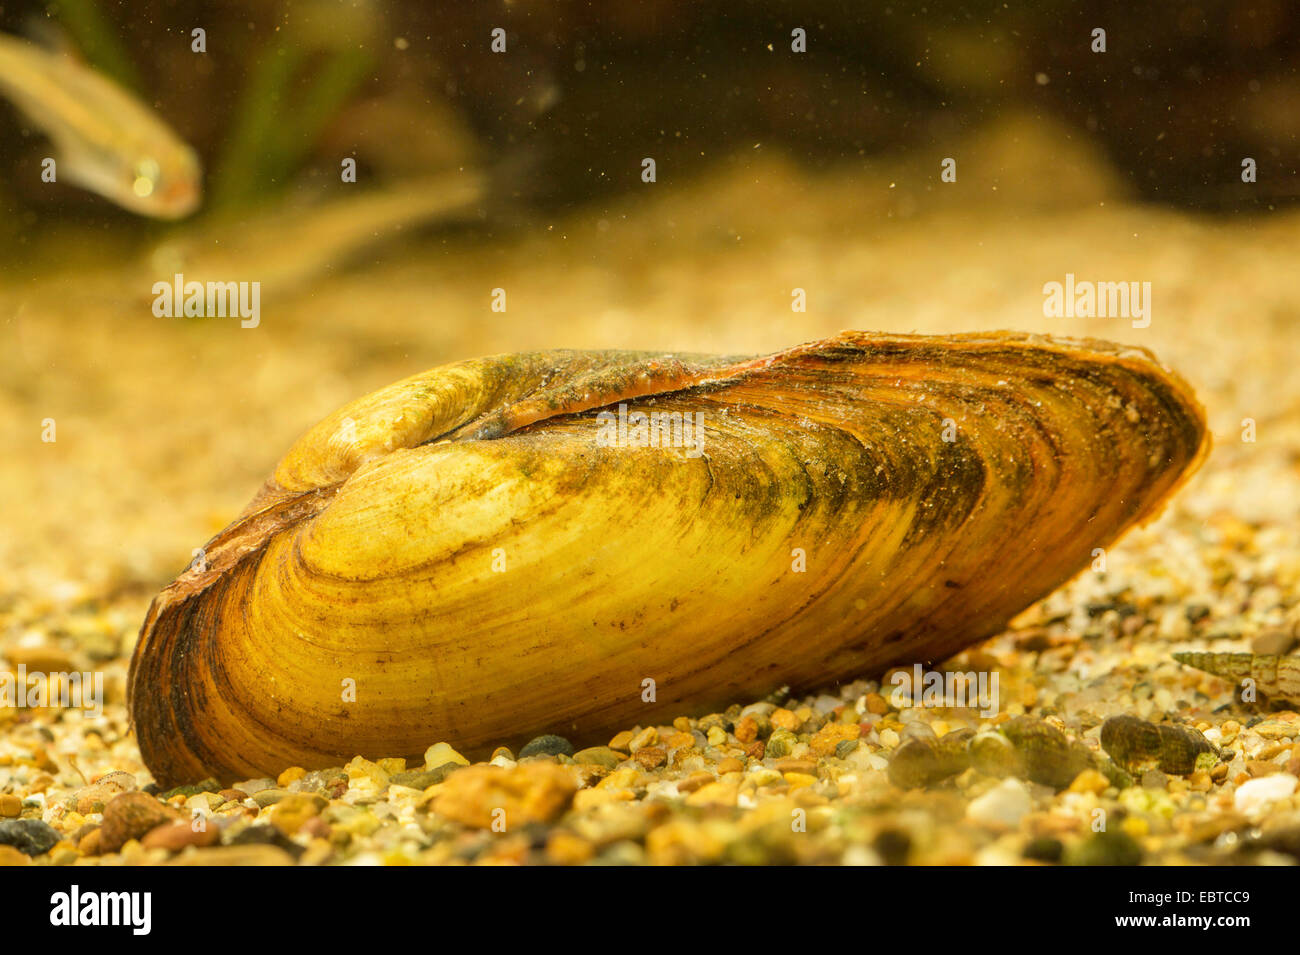 painter's mussel (Unio pictorum, Pollicepes pictorum), on the ground, Germany Stock Photo